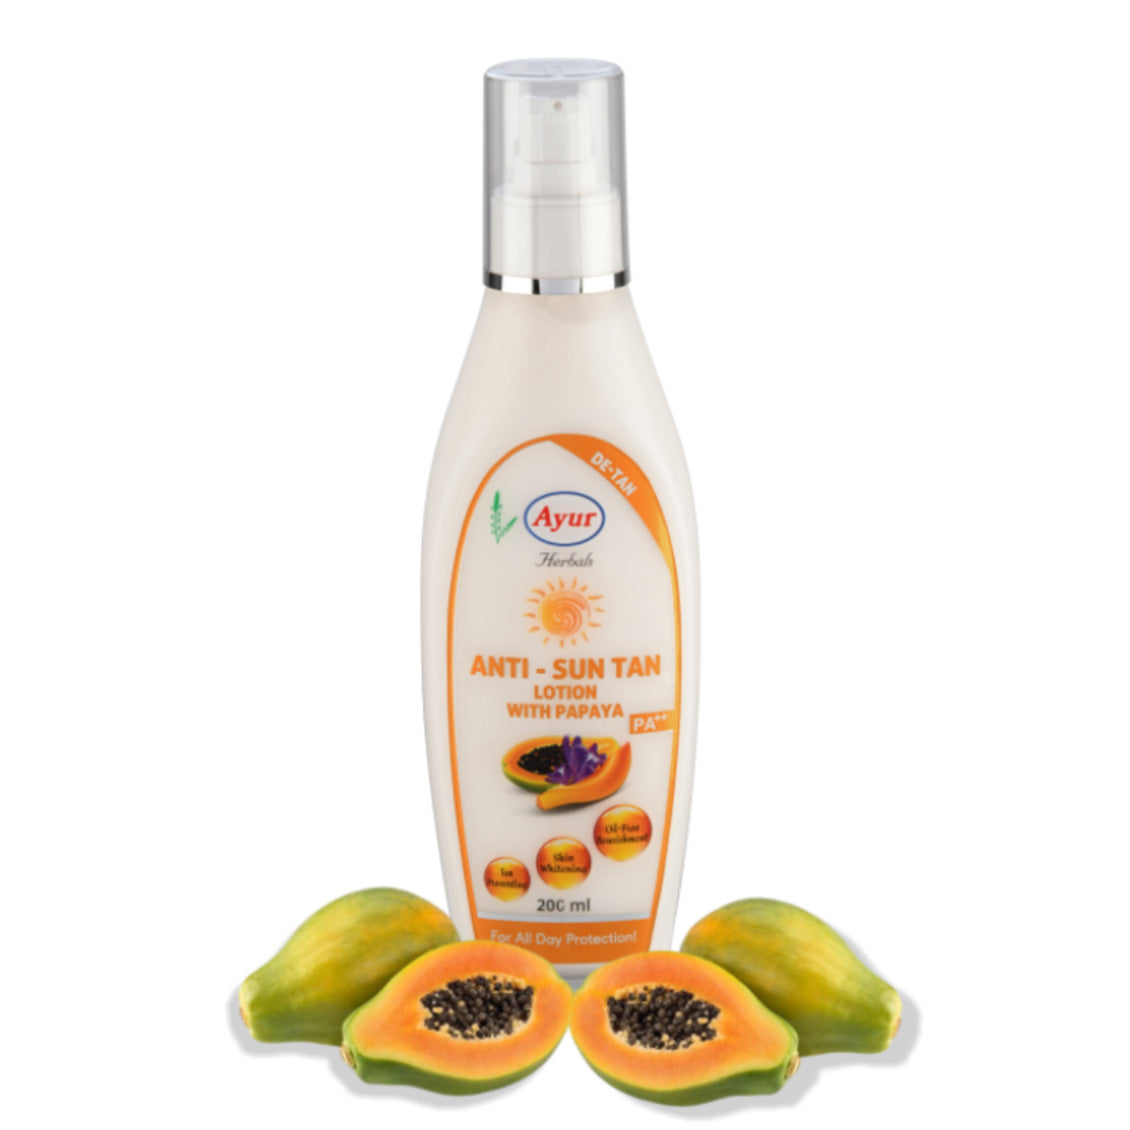 Anti-sun tan lotion with papaya